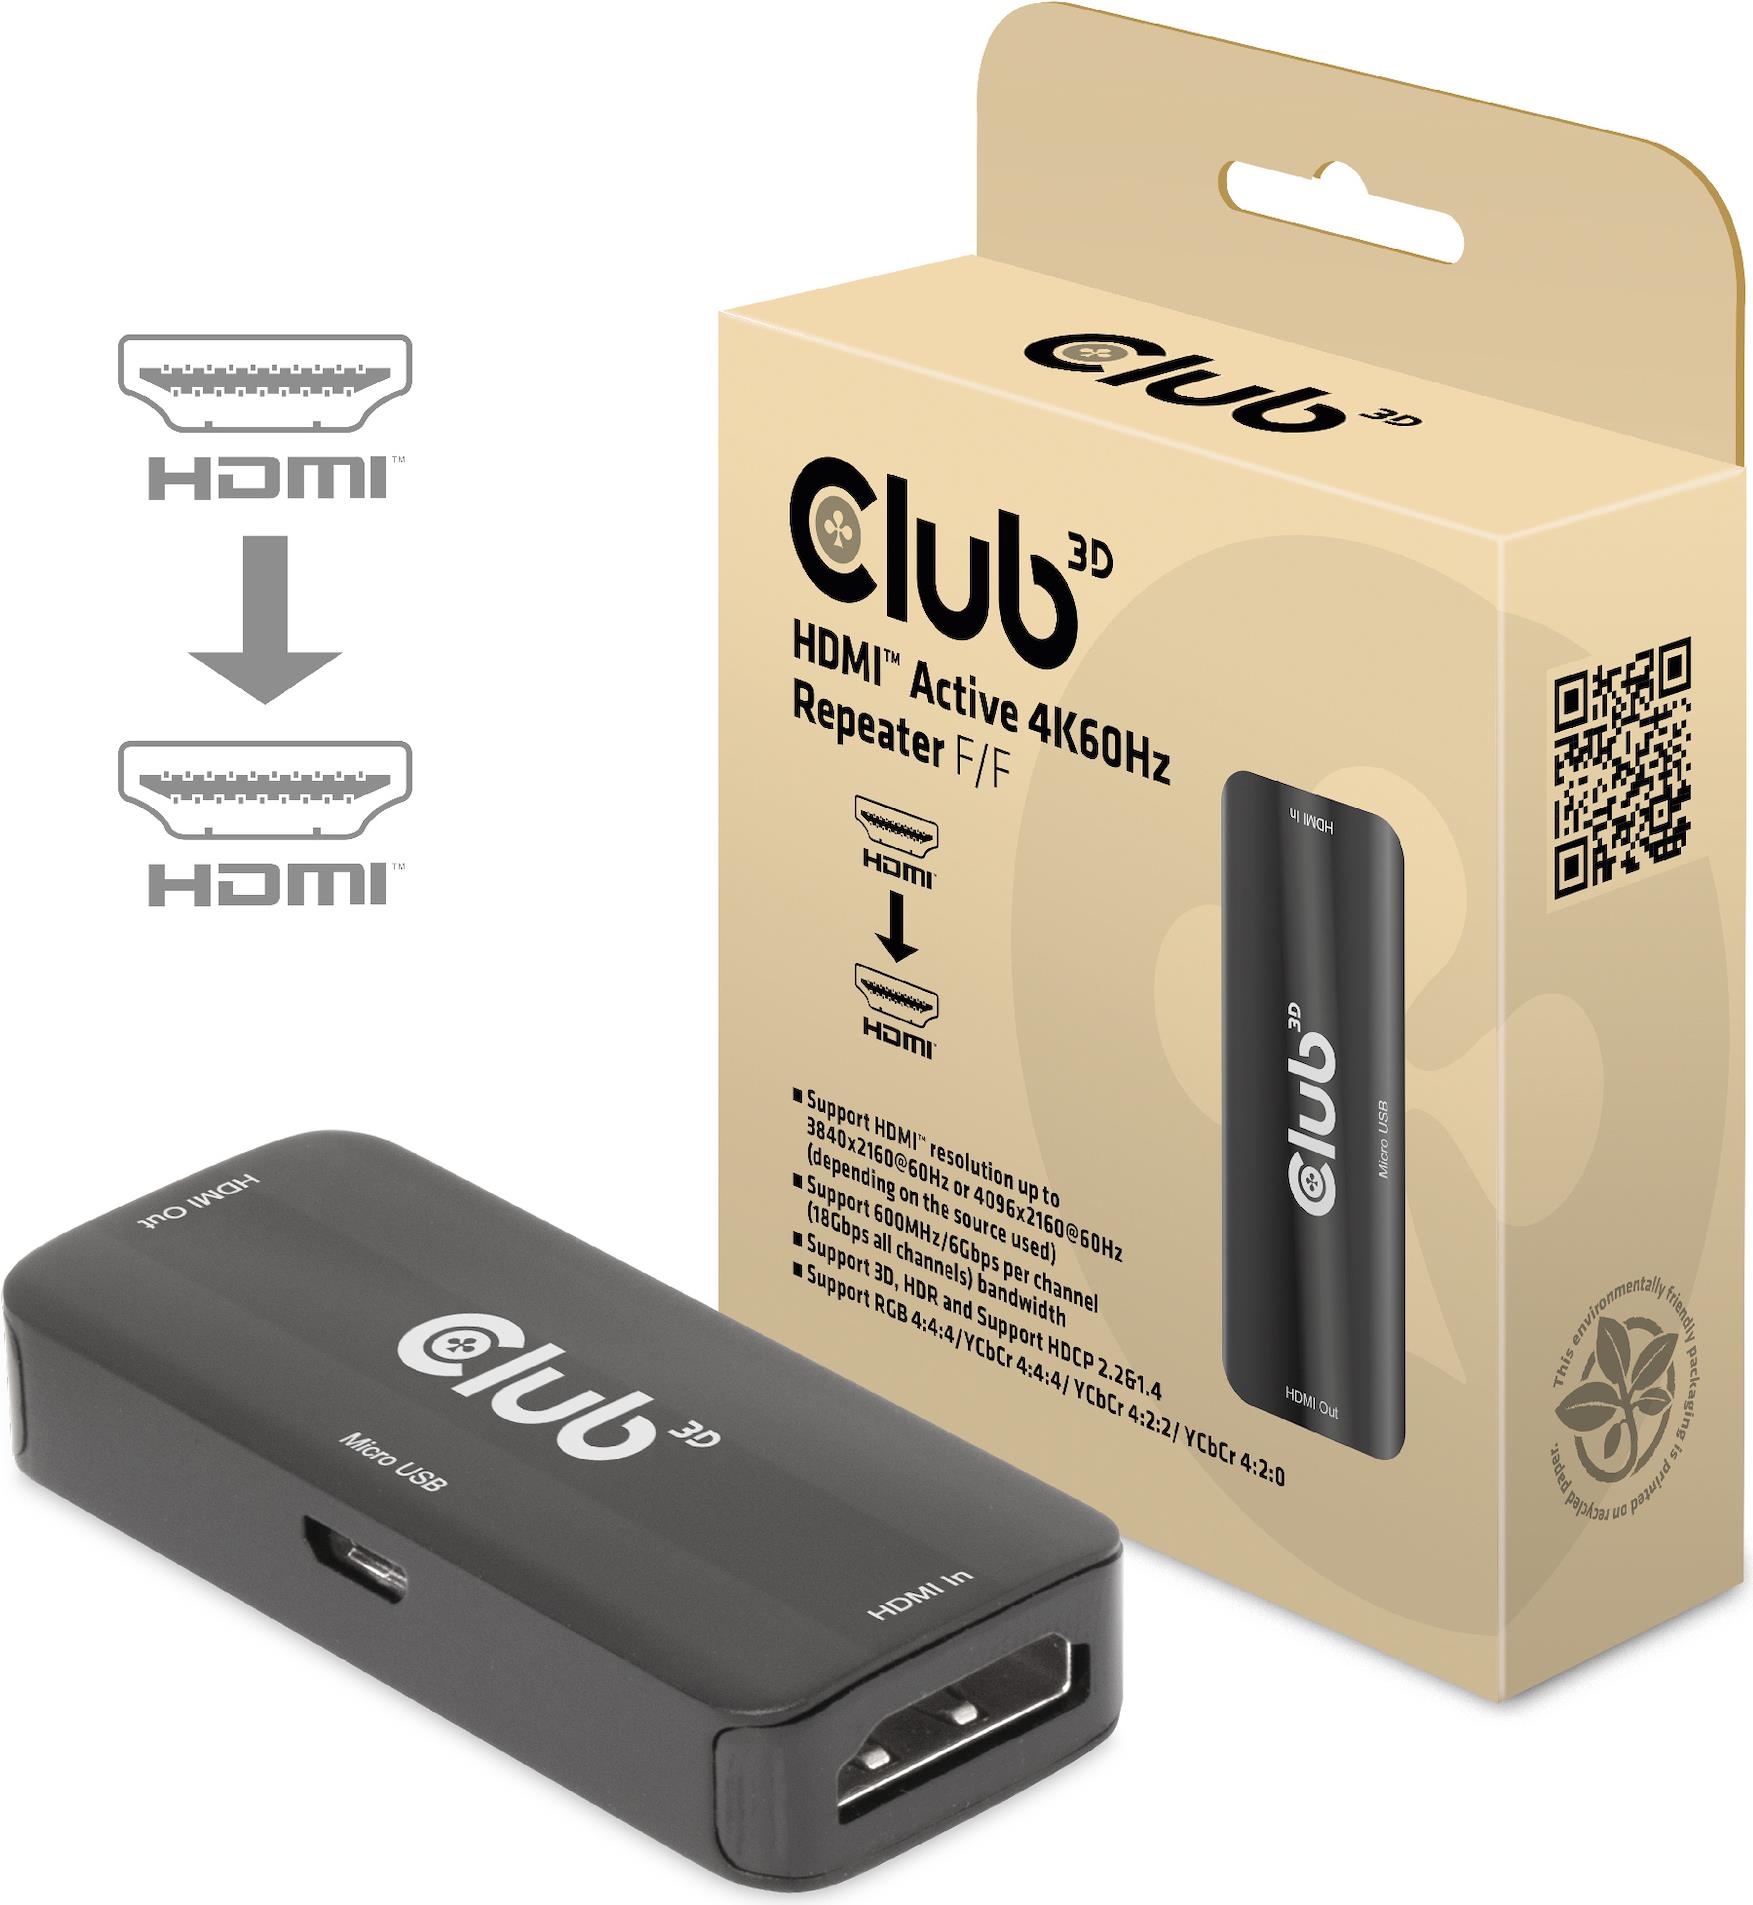 Club 3D HDMI Active 4K60Hz Repeater F/F - Digital/Display/Video (CAC-1307)